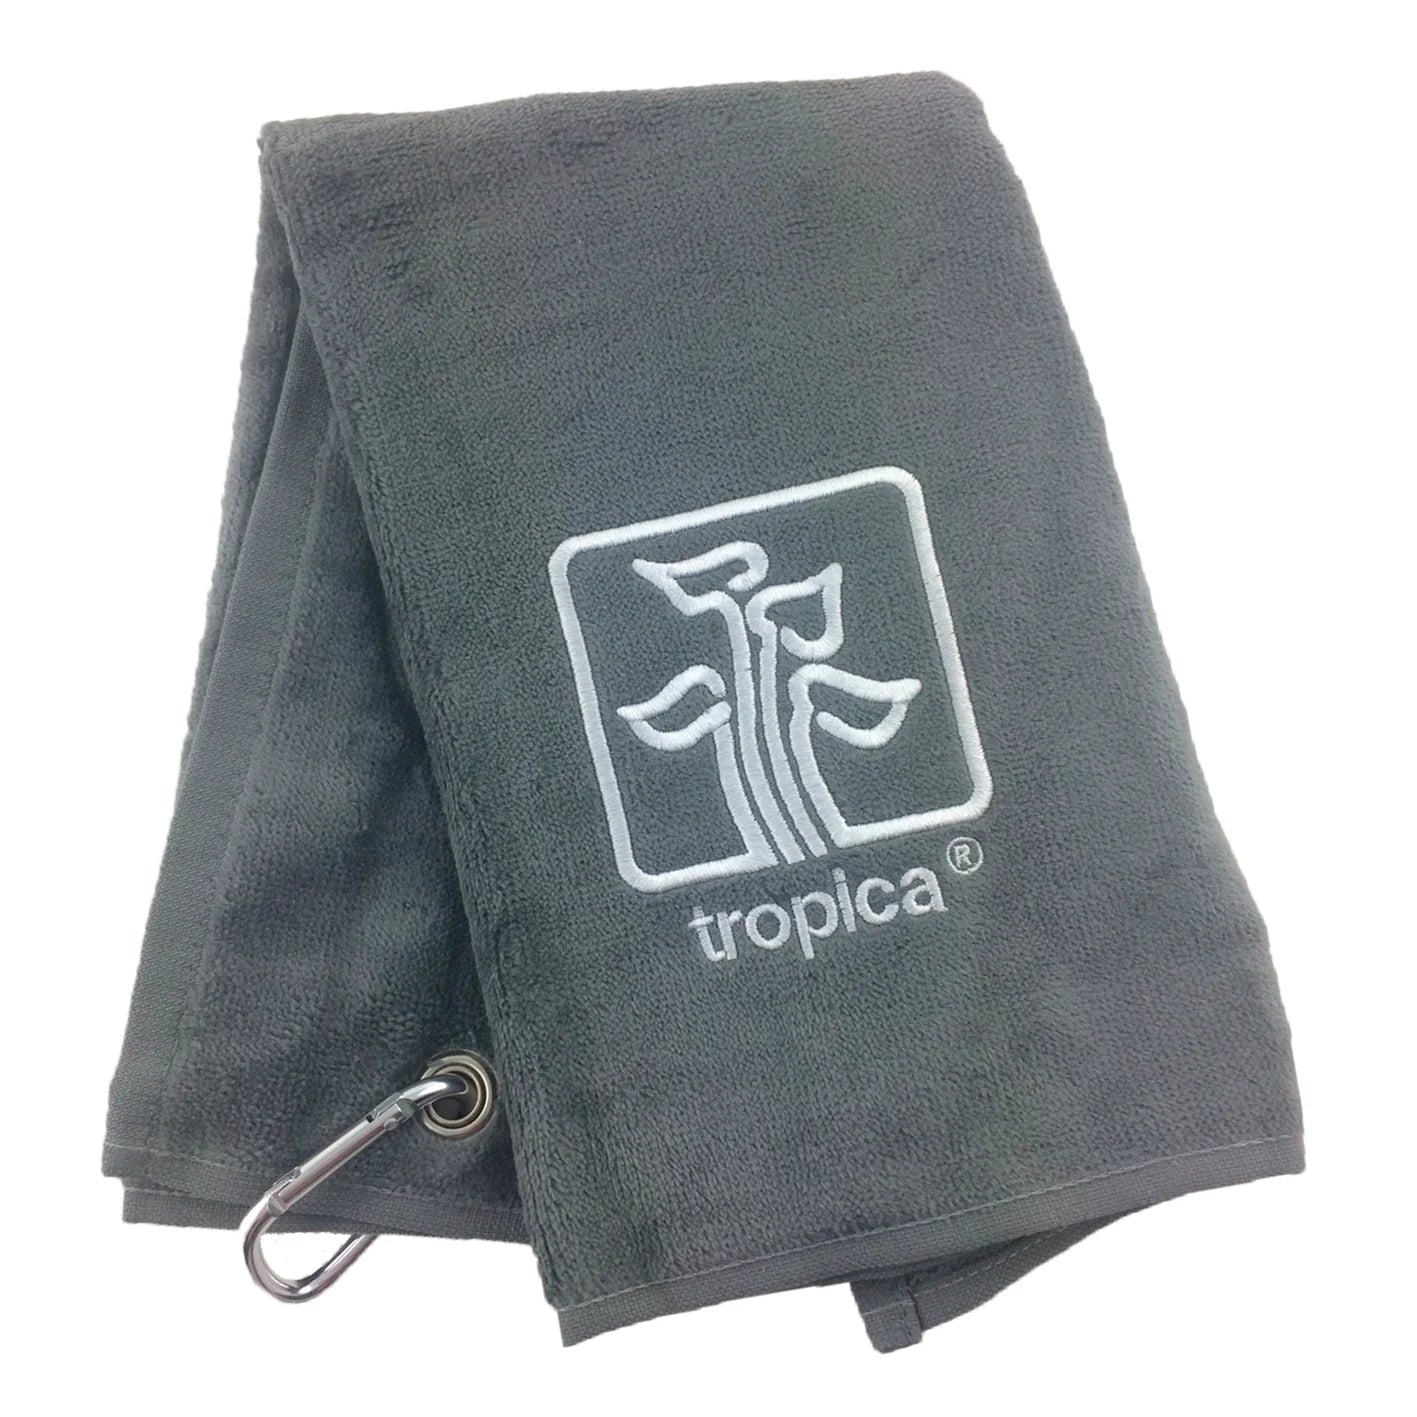 Tropica Scapers Towel